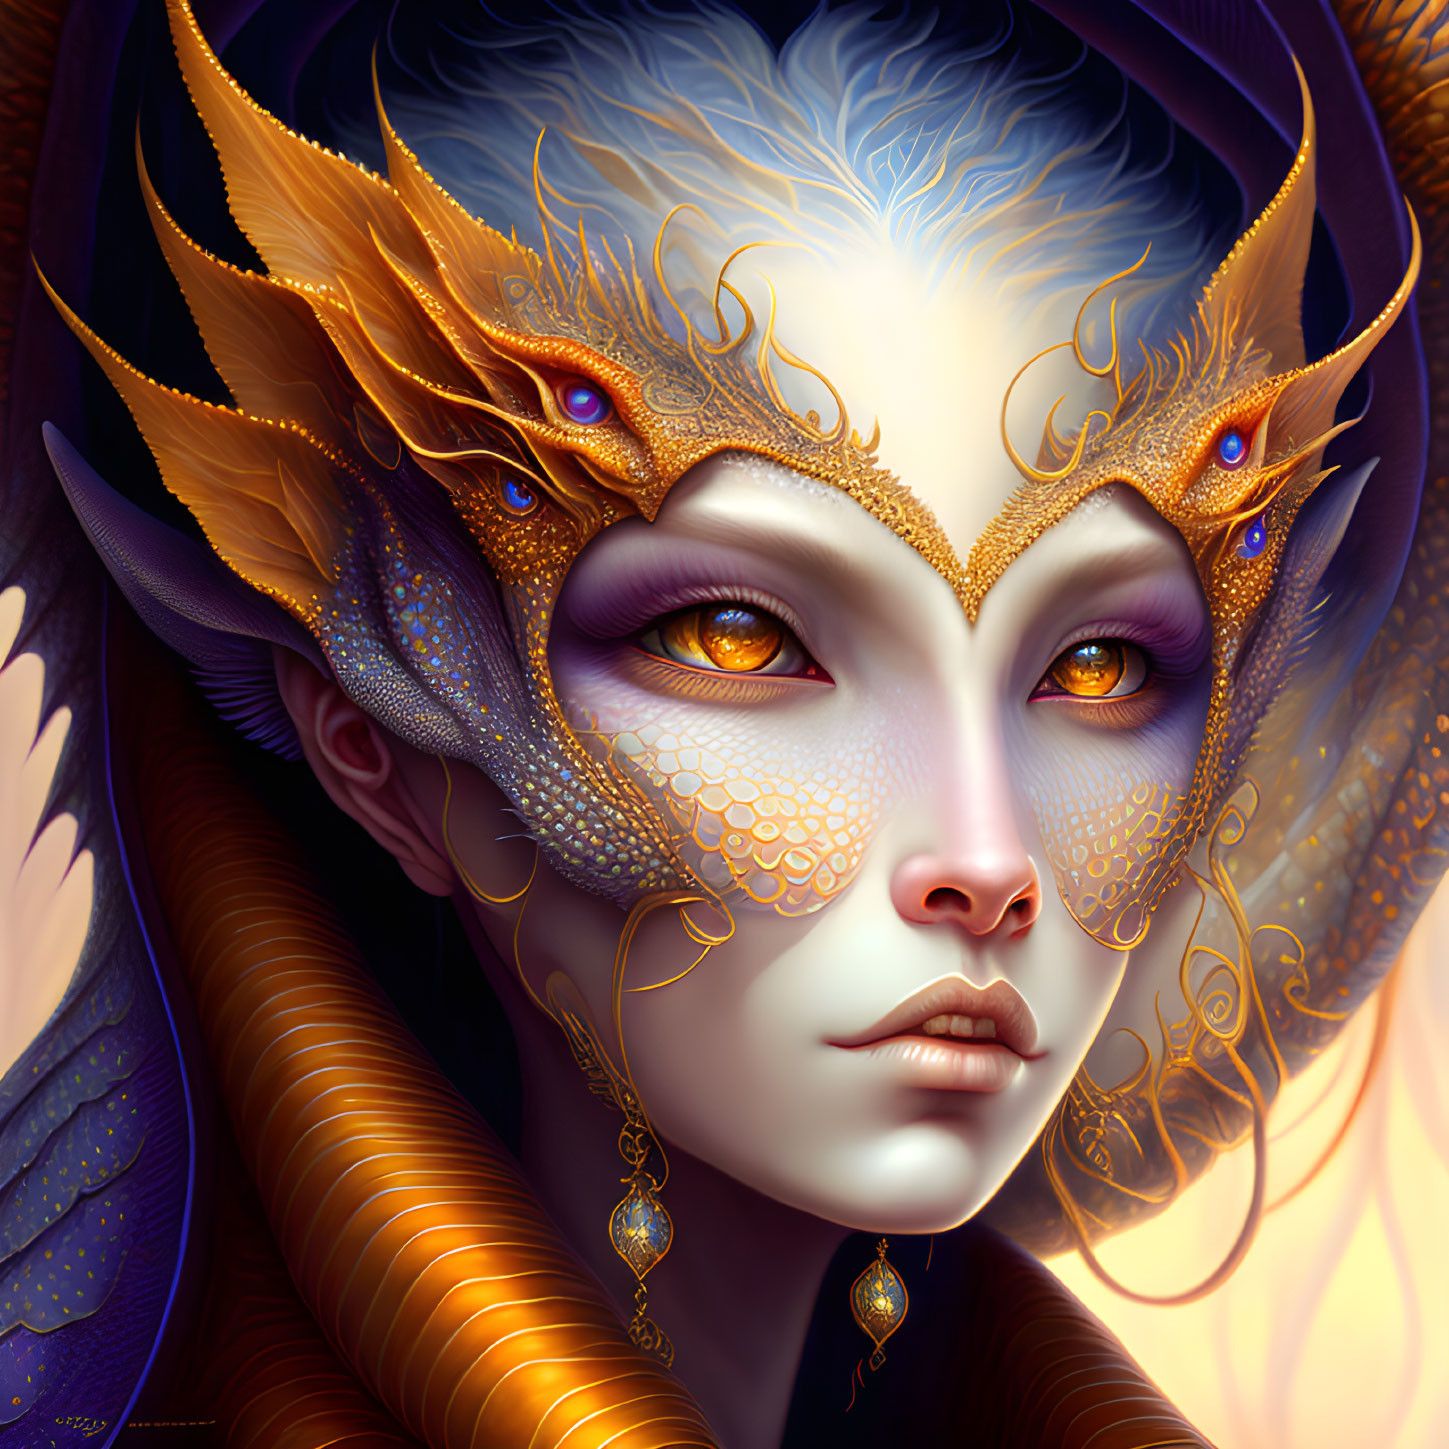 Fantastical Female Figure with Detailed Golden Dragon Mask